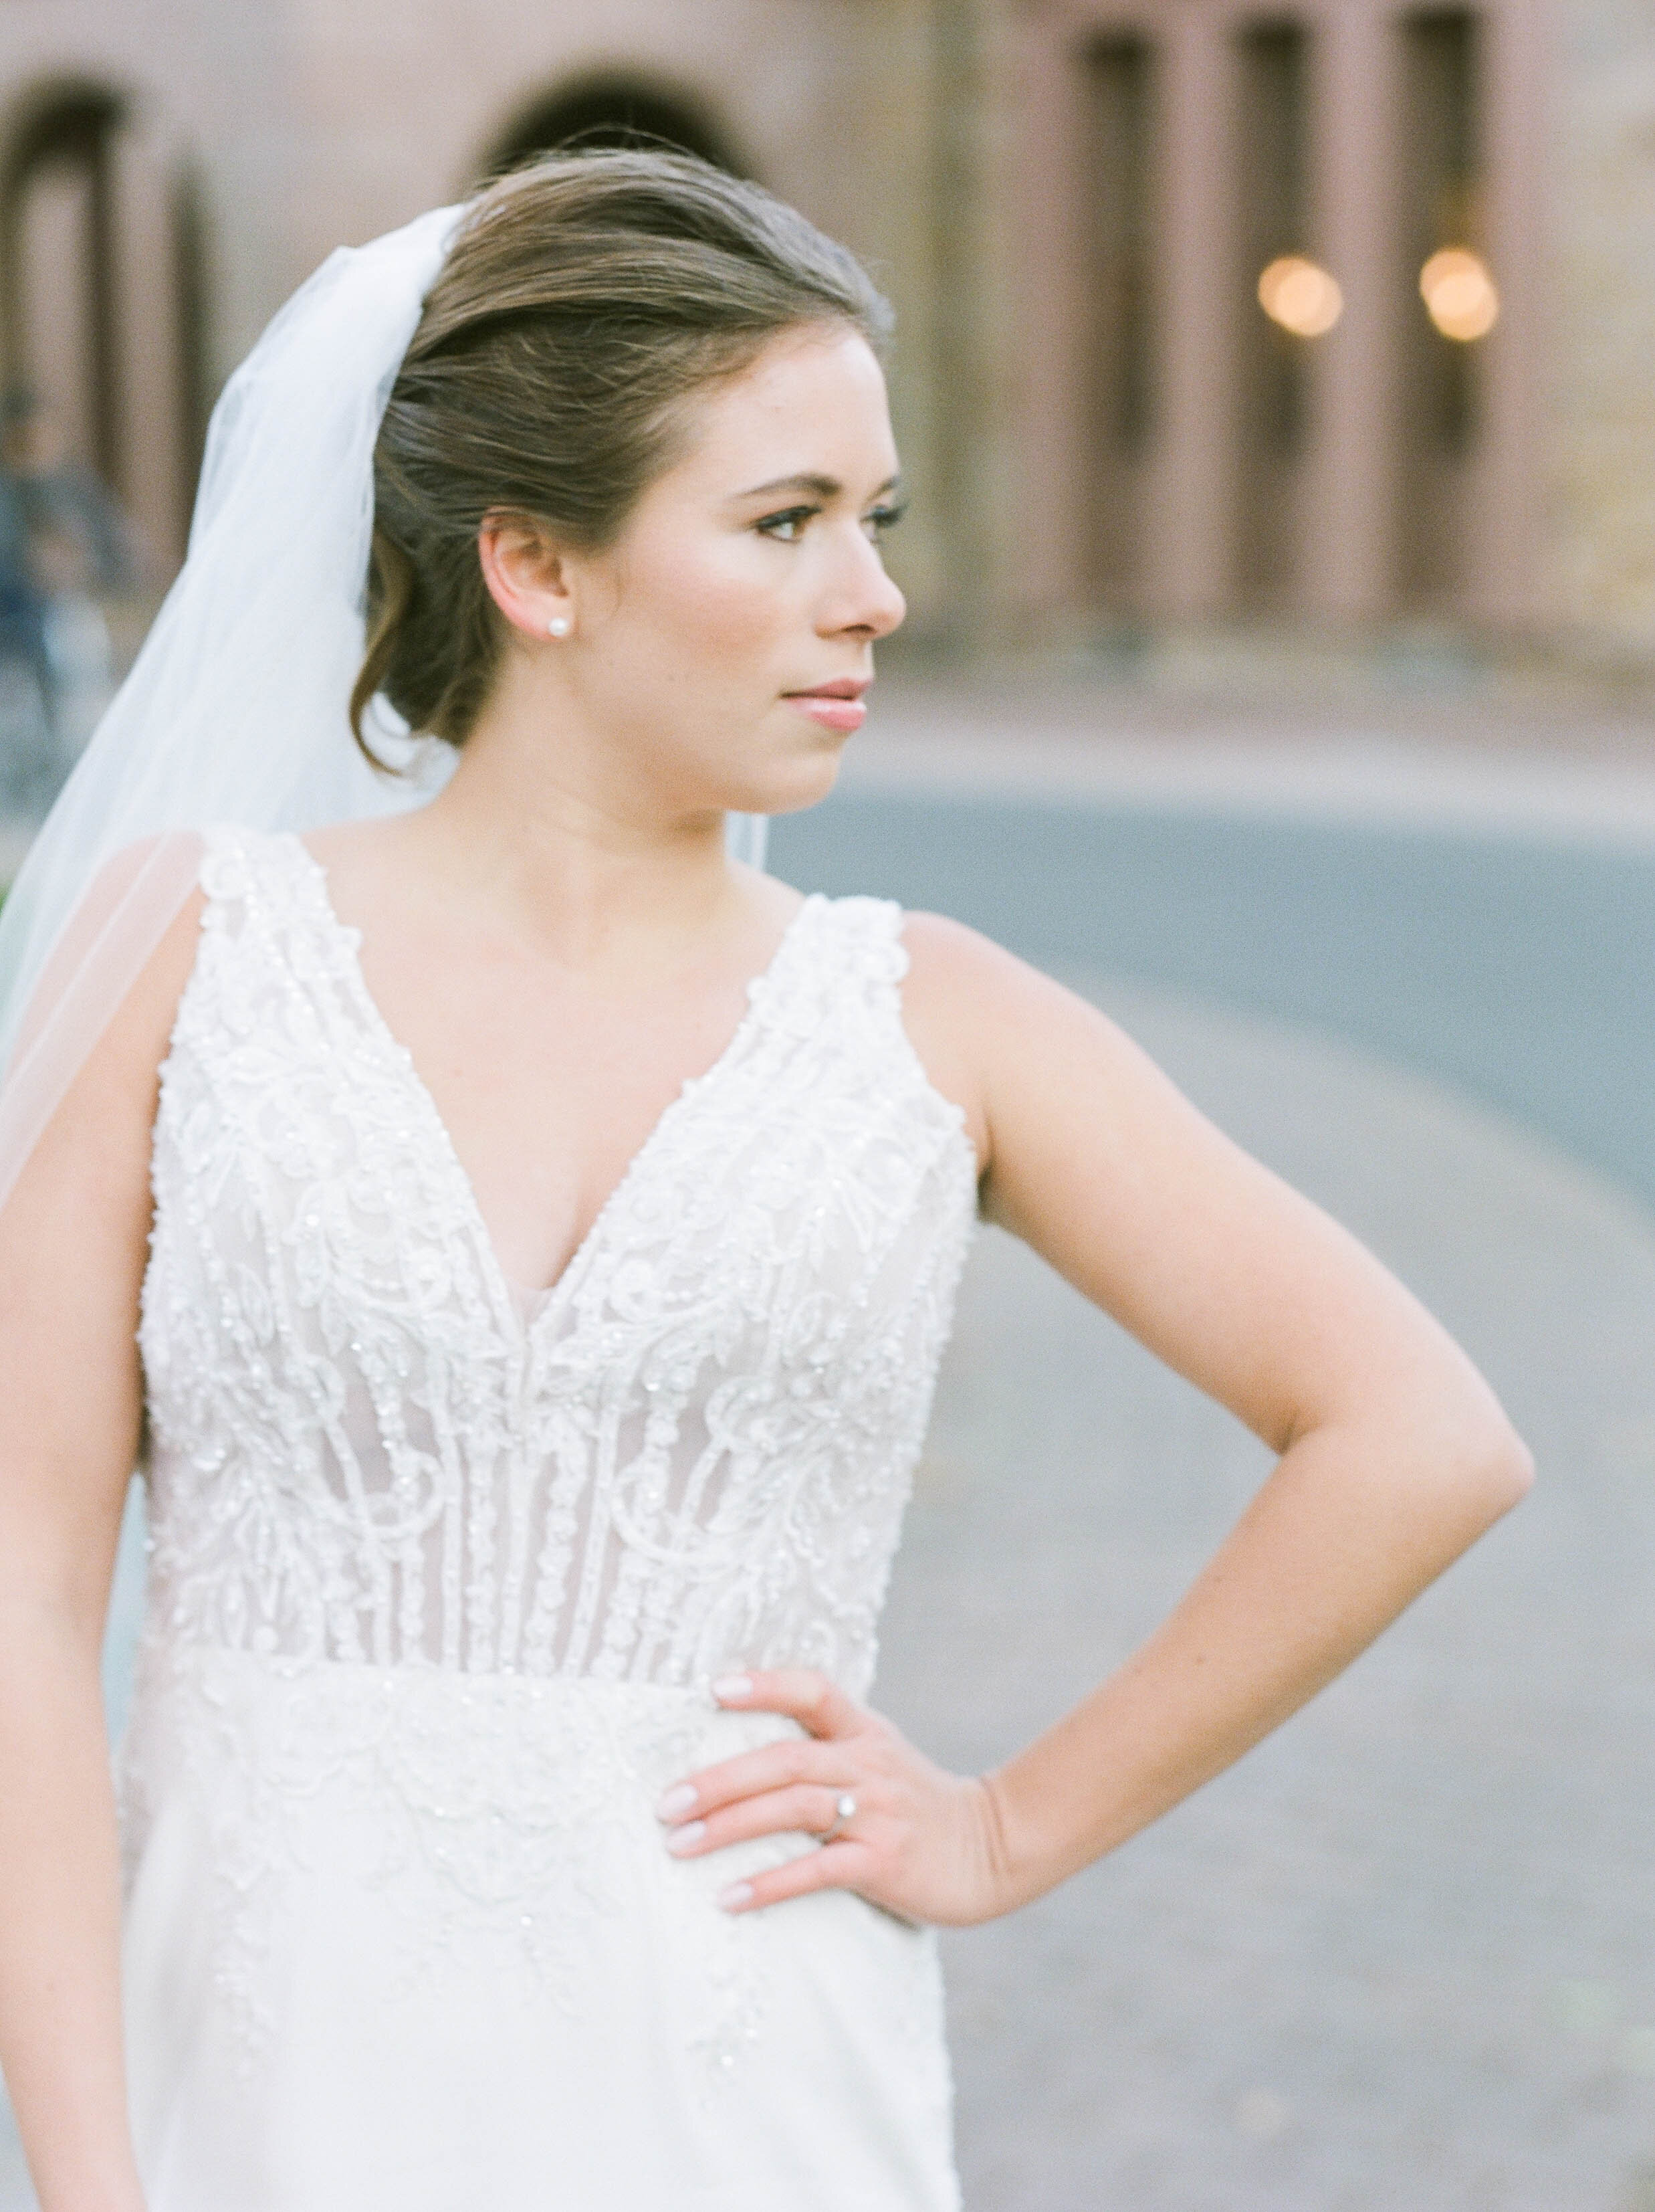 Fine Art Bride Editorial at Princeton University featured on Glittery Bride